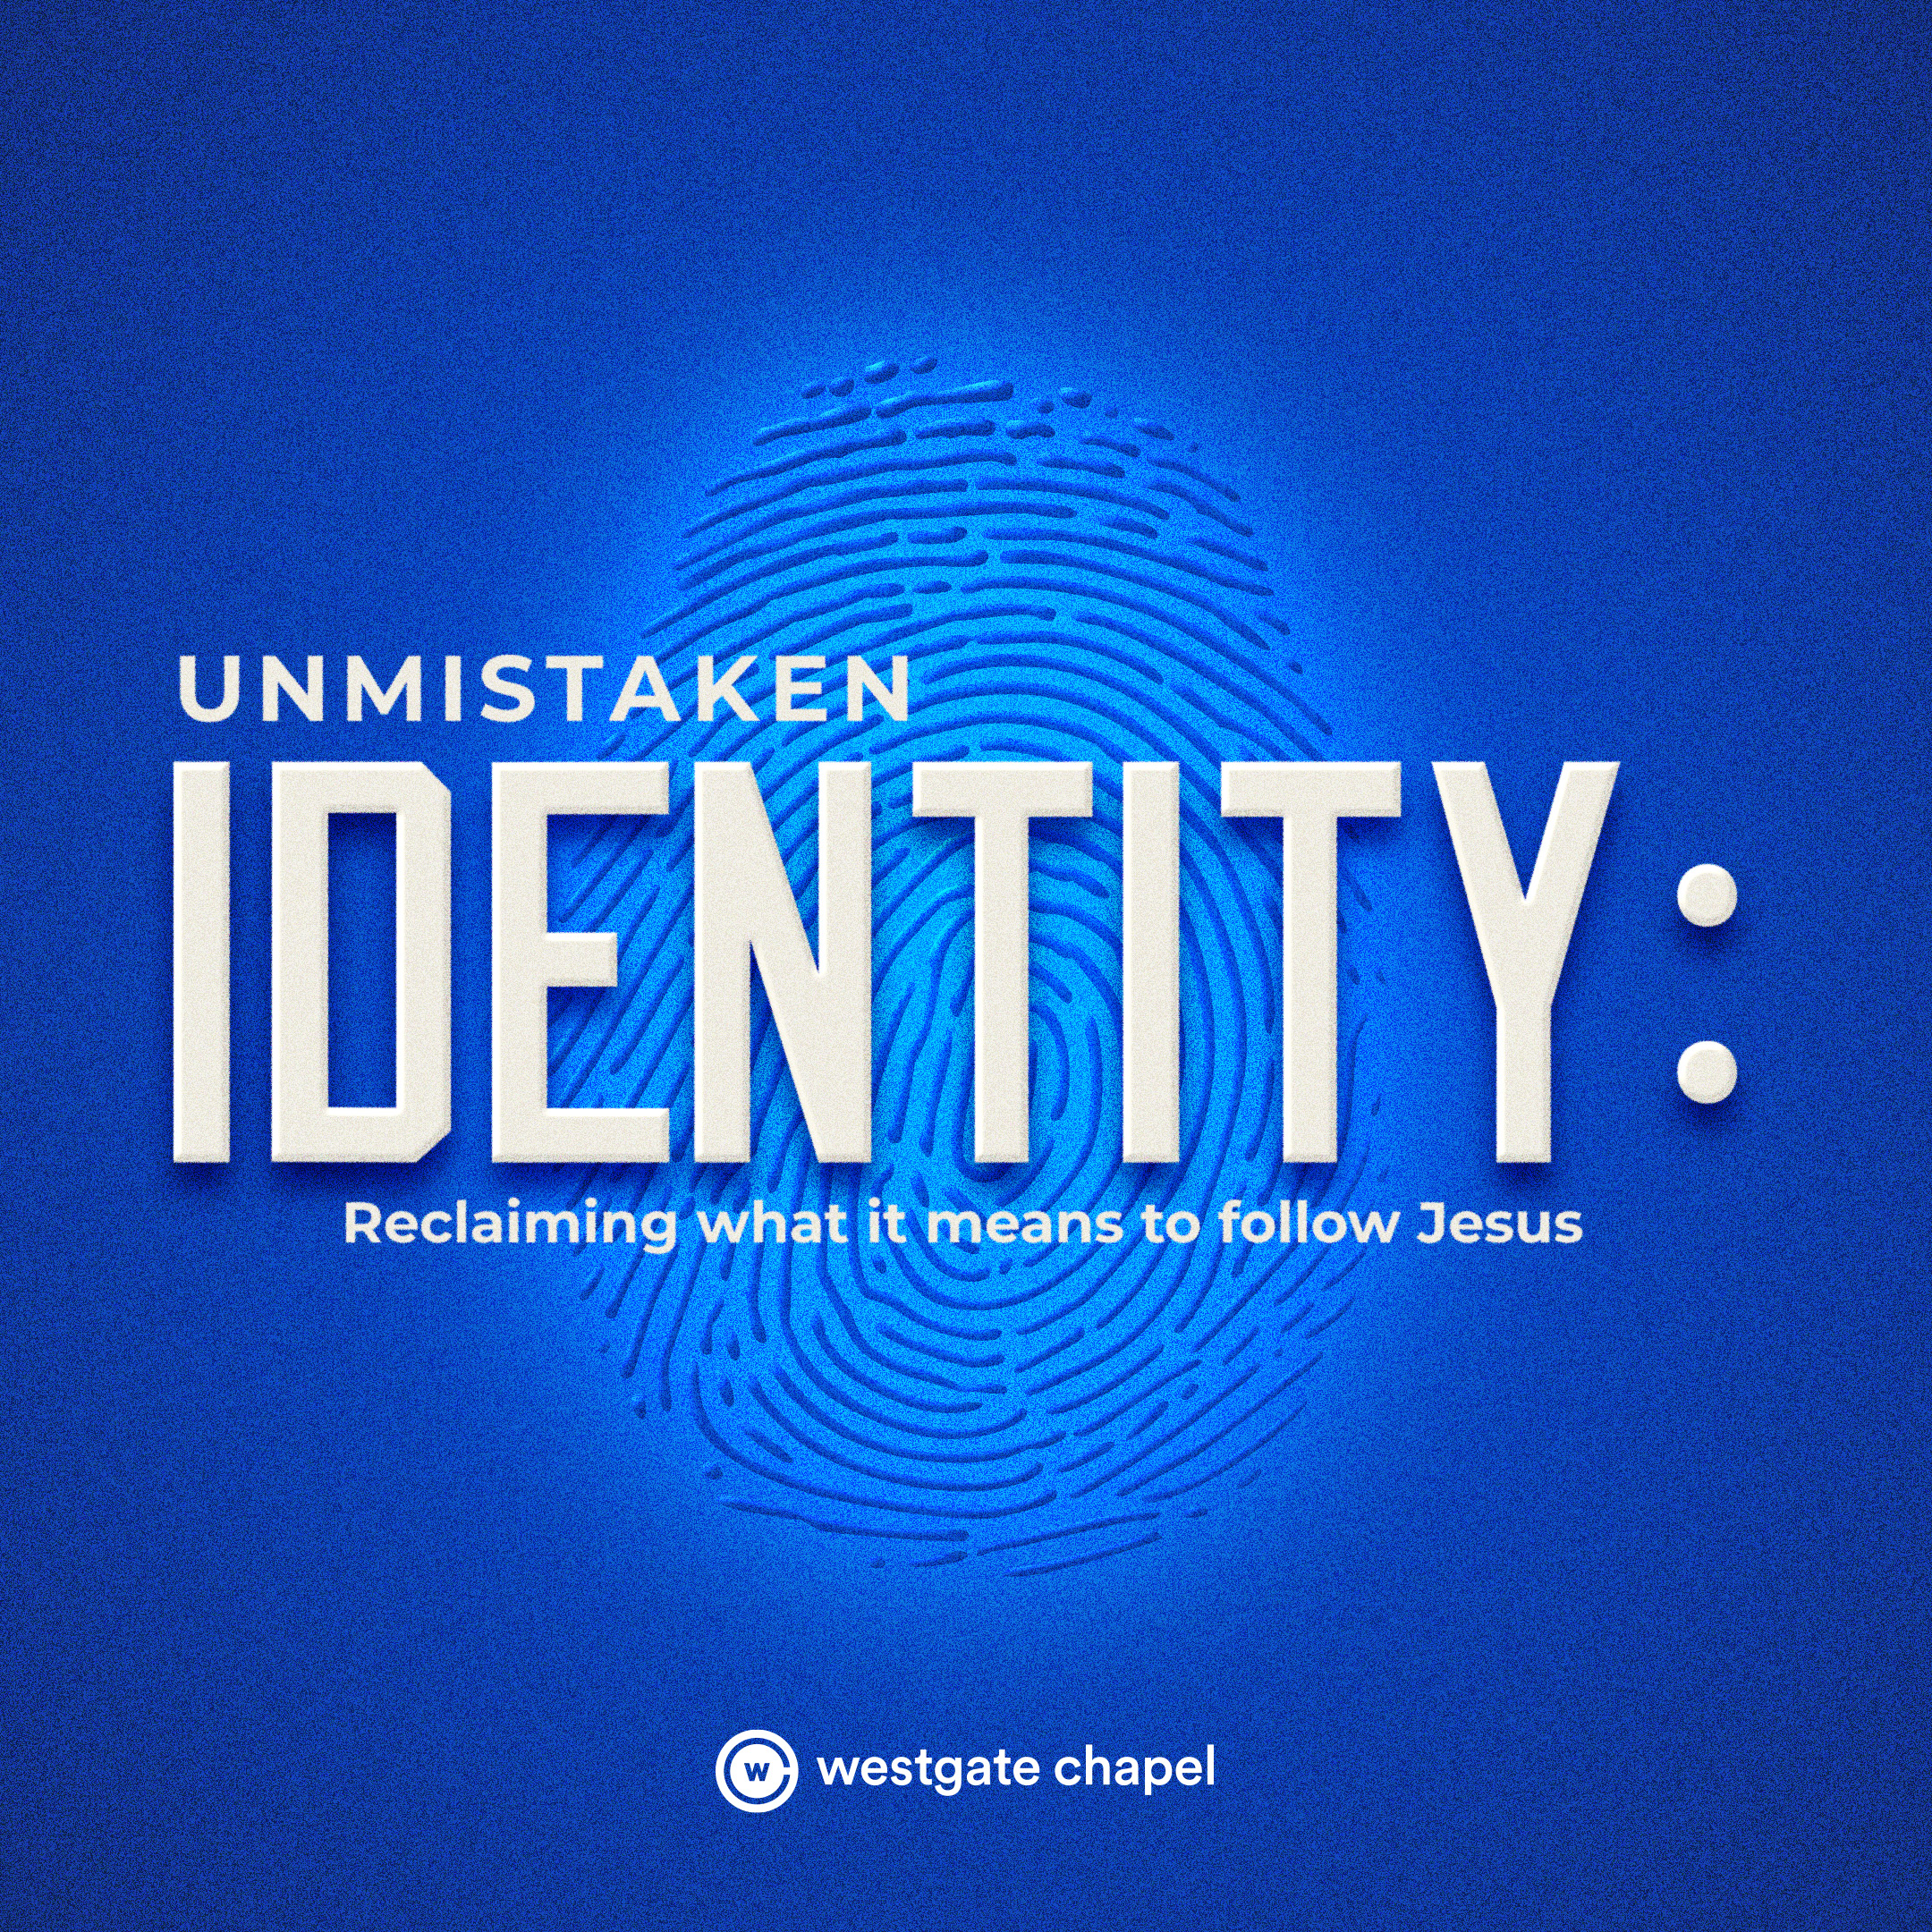 UnMistaken Identity: From HATE to LOVE - Mark 12:28-34, 1 John 4:7-21